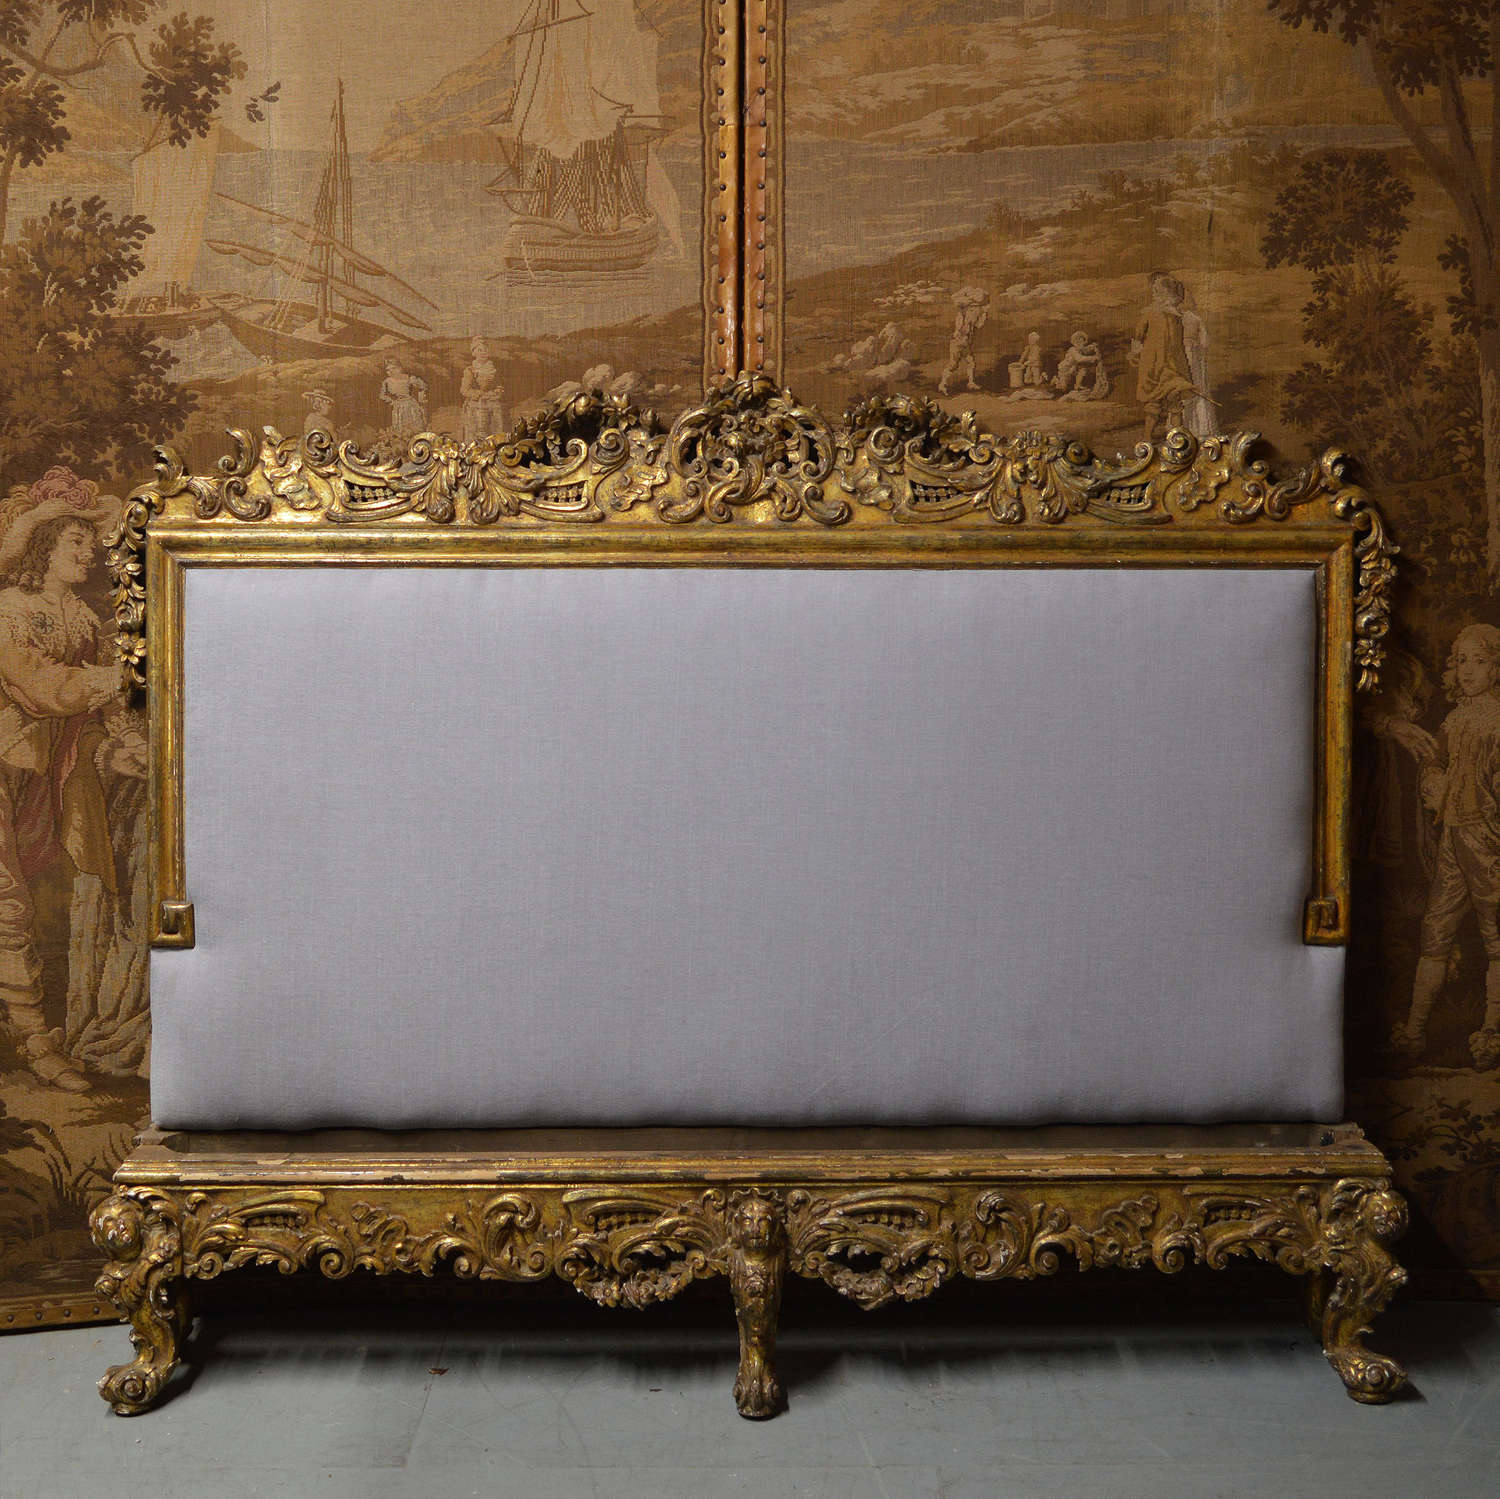 19th Century Italian Renaissance style giltwood bedstead